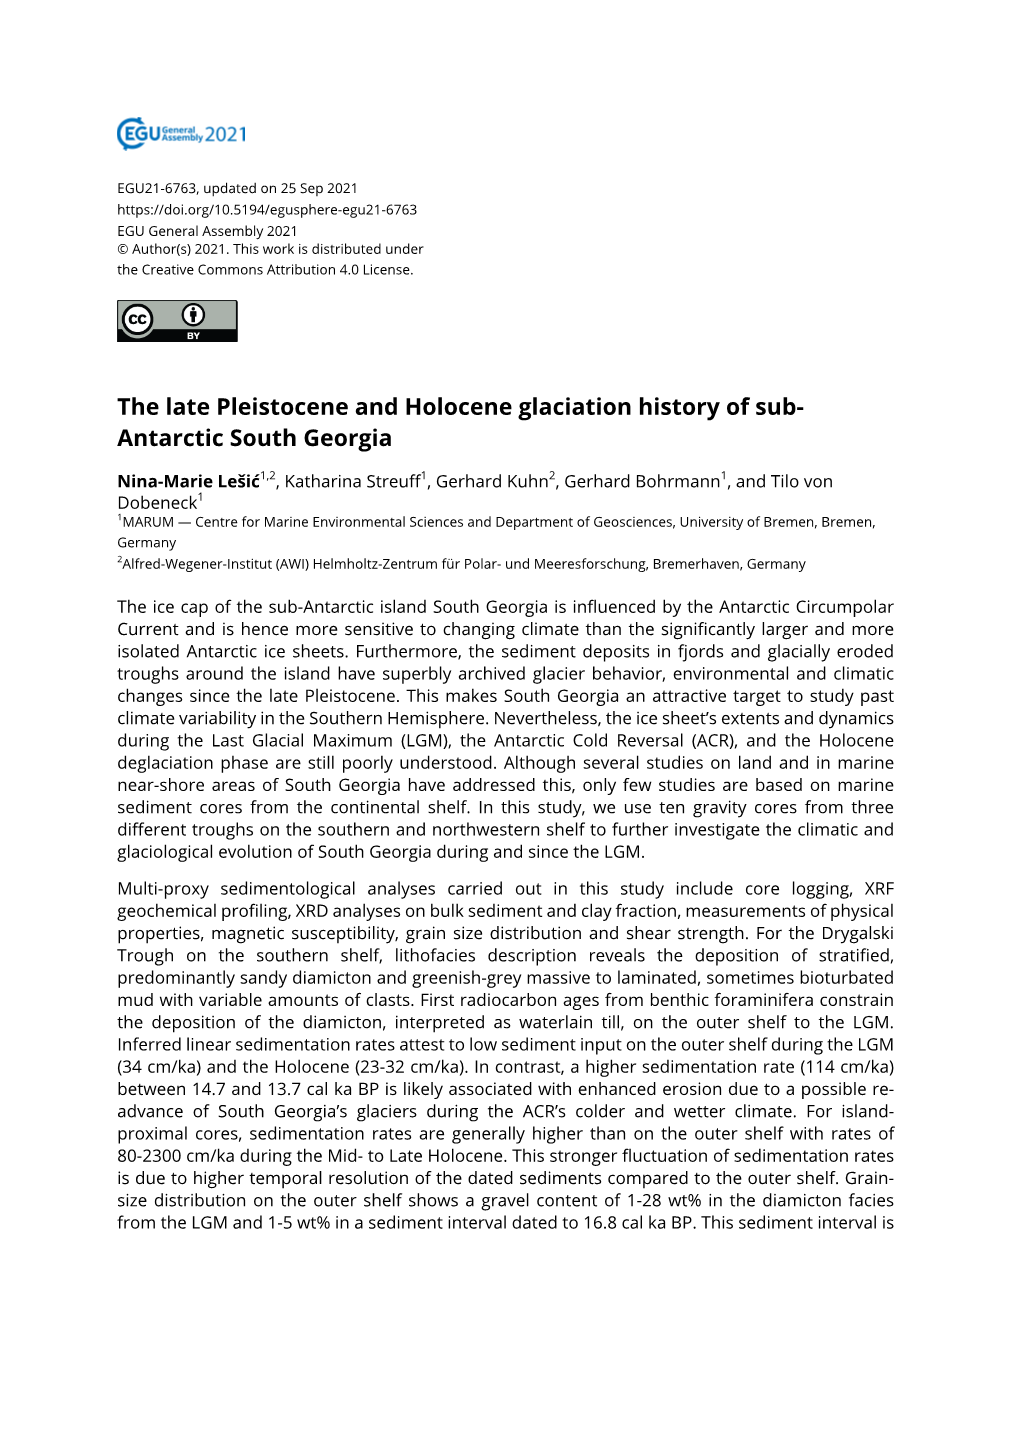 The Late Pleistocene and Holocene Glaciation History of Sub- Antarctic South Georgia